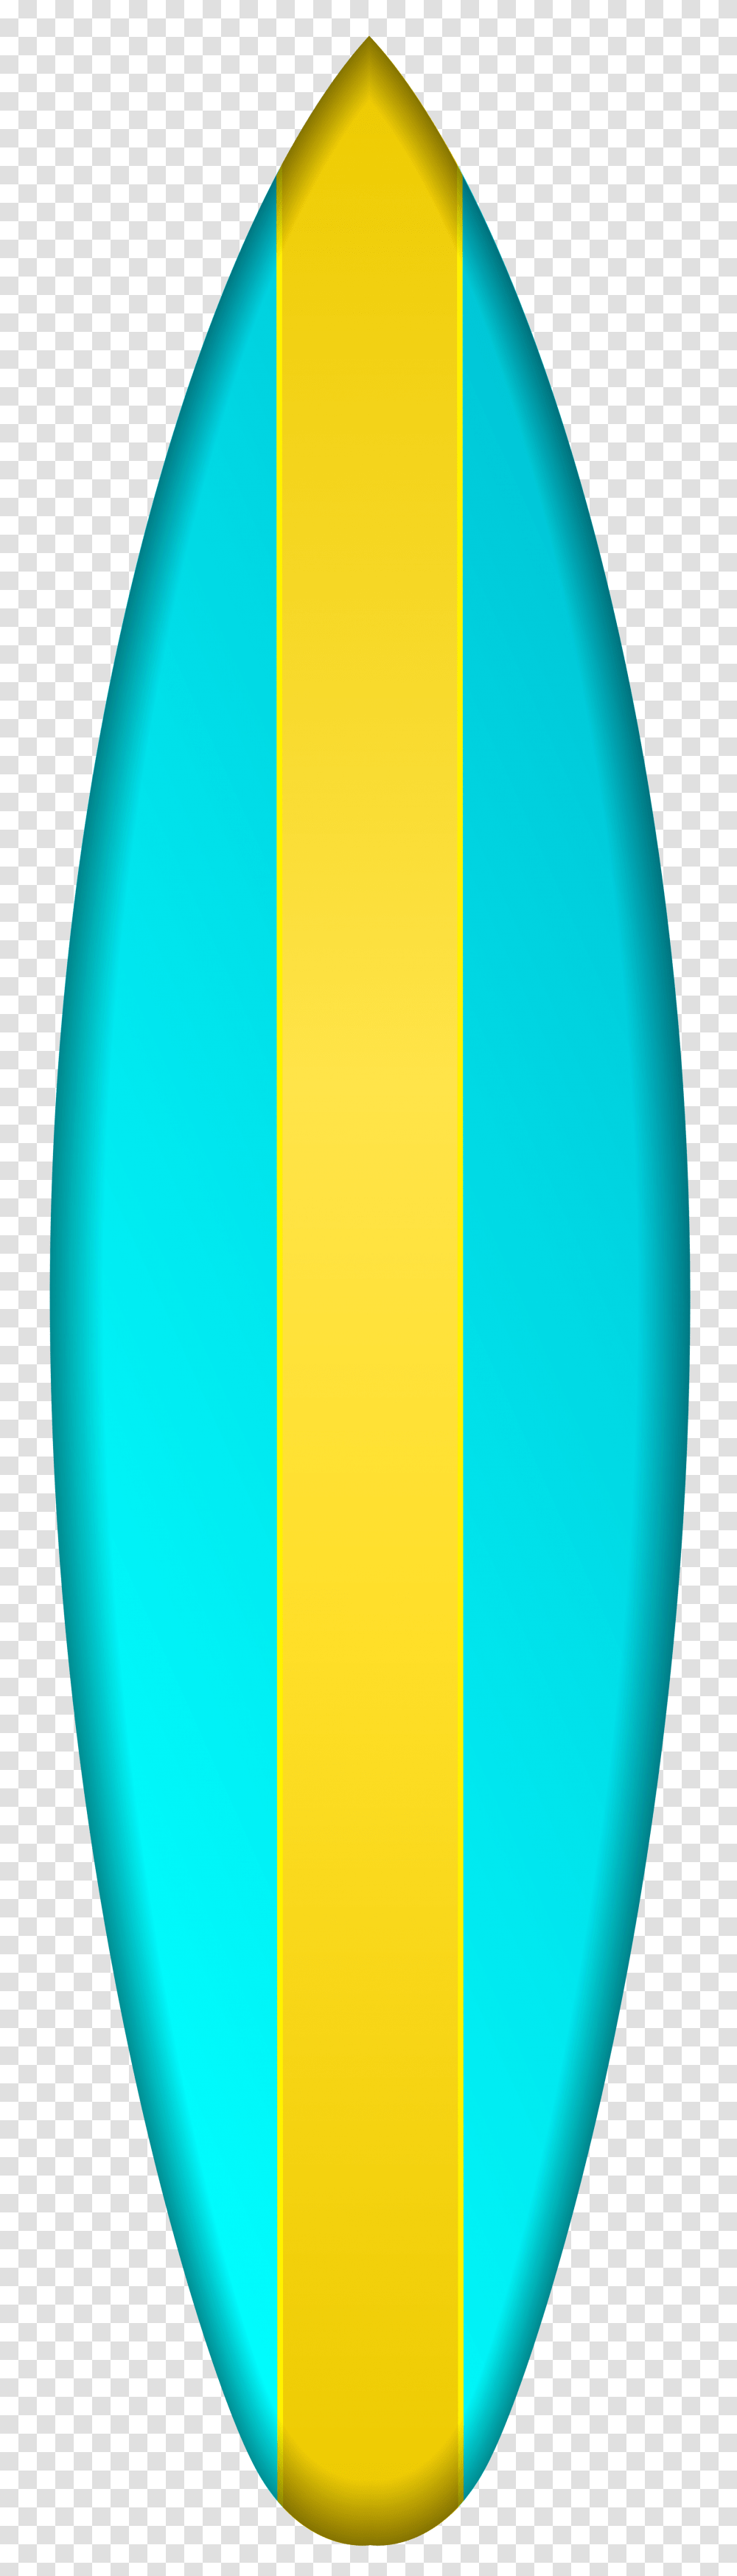 Surfboard Clipart Regarding Surfboard Clipart, Sea, Outdoors, Water, Nature Transparent Png